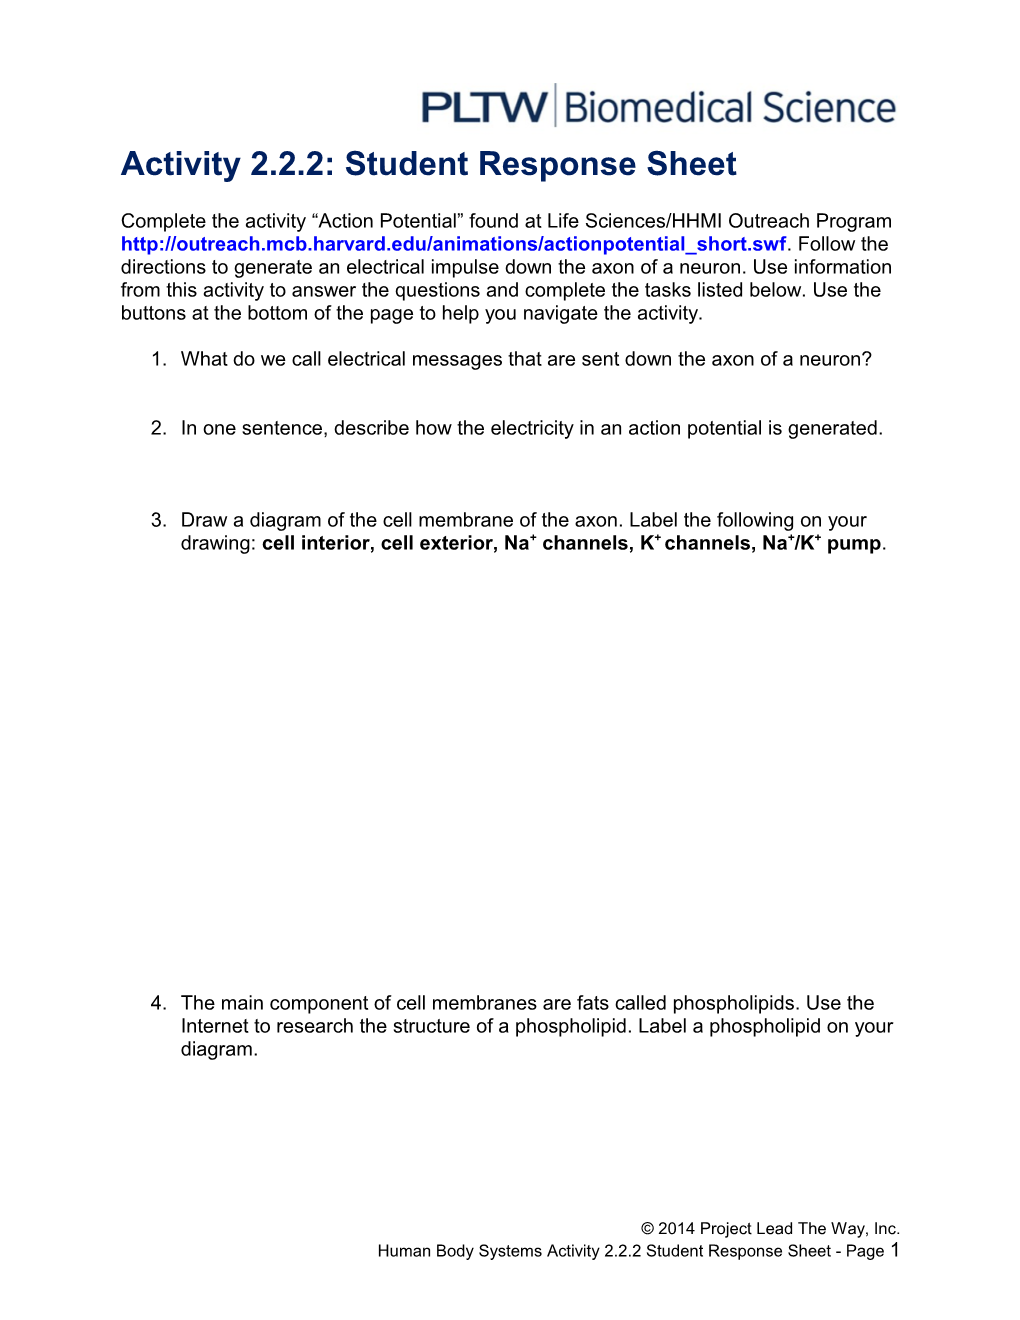 Activity 2.2.2: Student Response Sheet